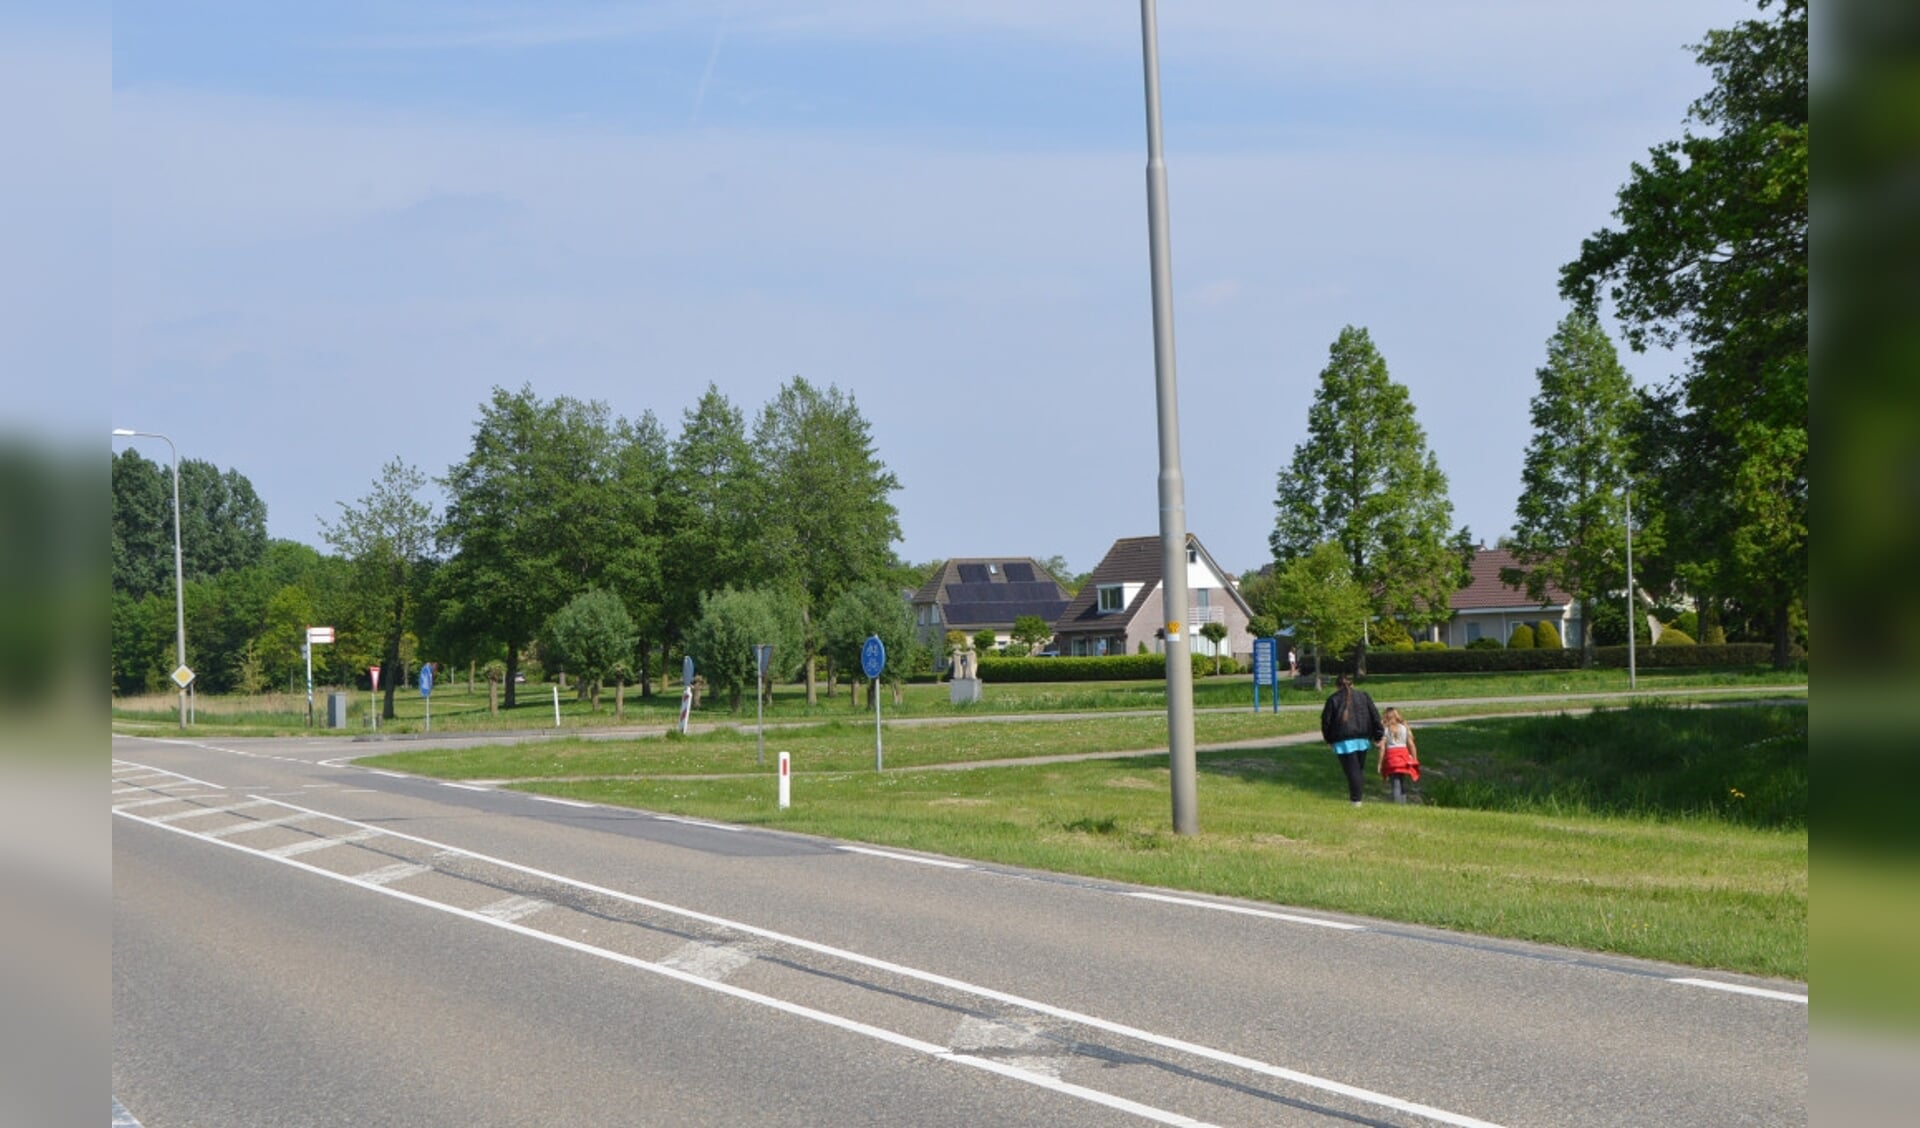  De kruising van de Swifterringweg met de Lange Streek bij Swifterbant.